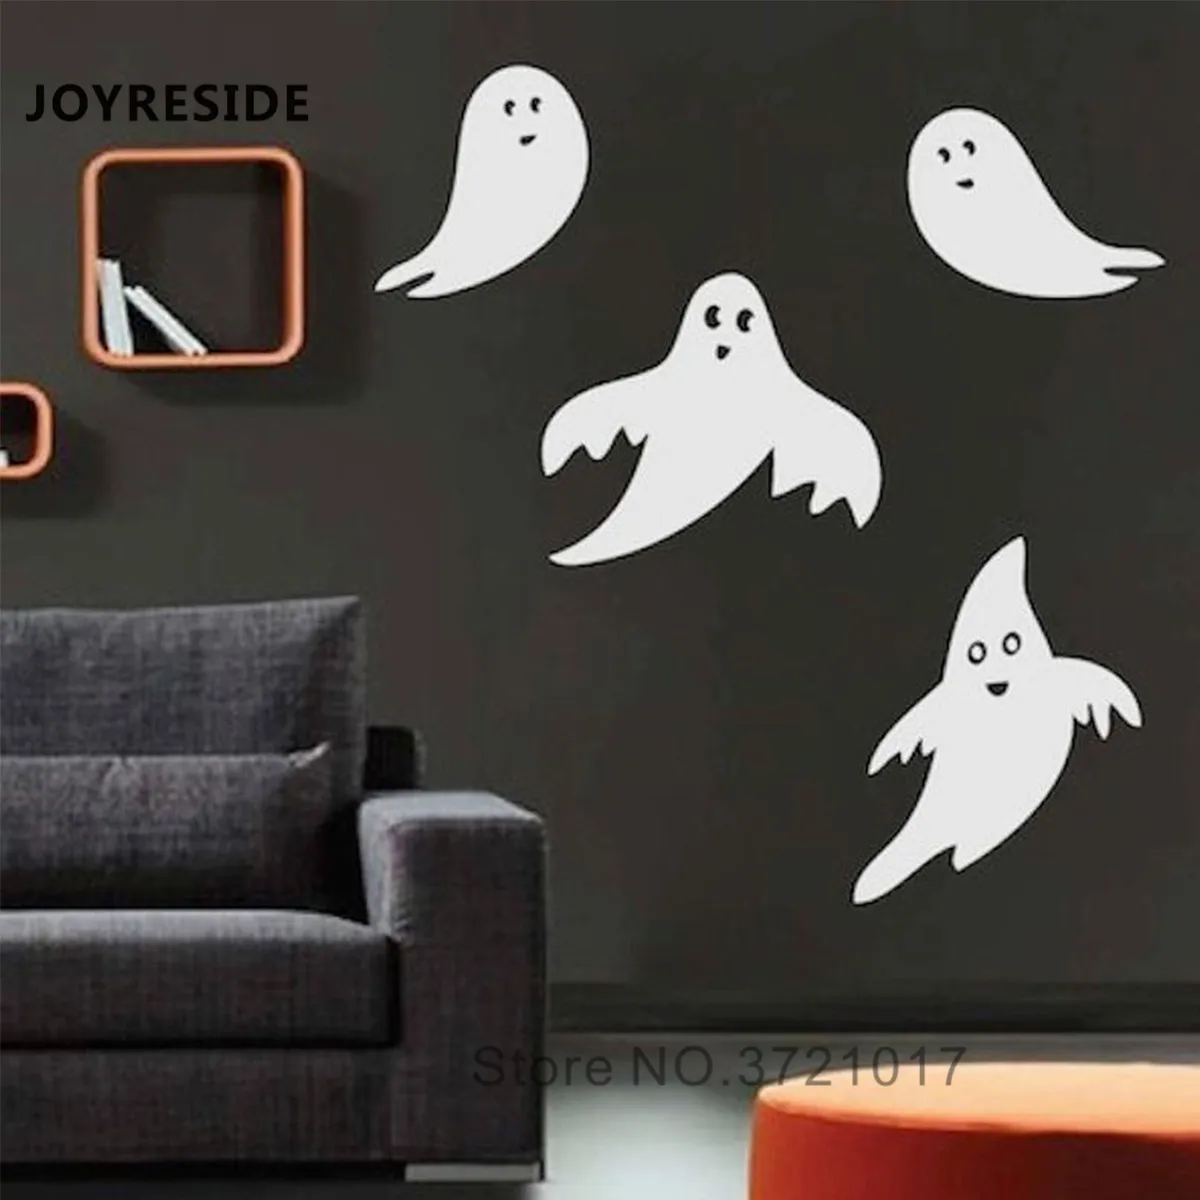 

JOYRESIDE Ghost Wall Sticker Halloween Art Design Decals Home Livingroom Kids Rooms Wall Decal Halloween Stickers Decor WM064